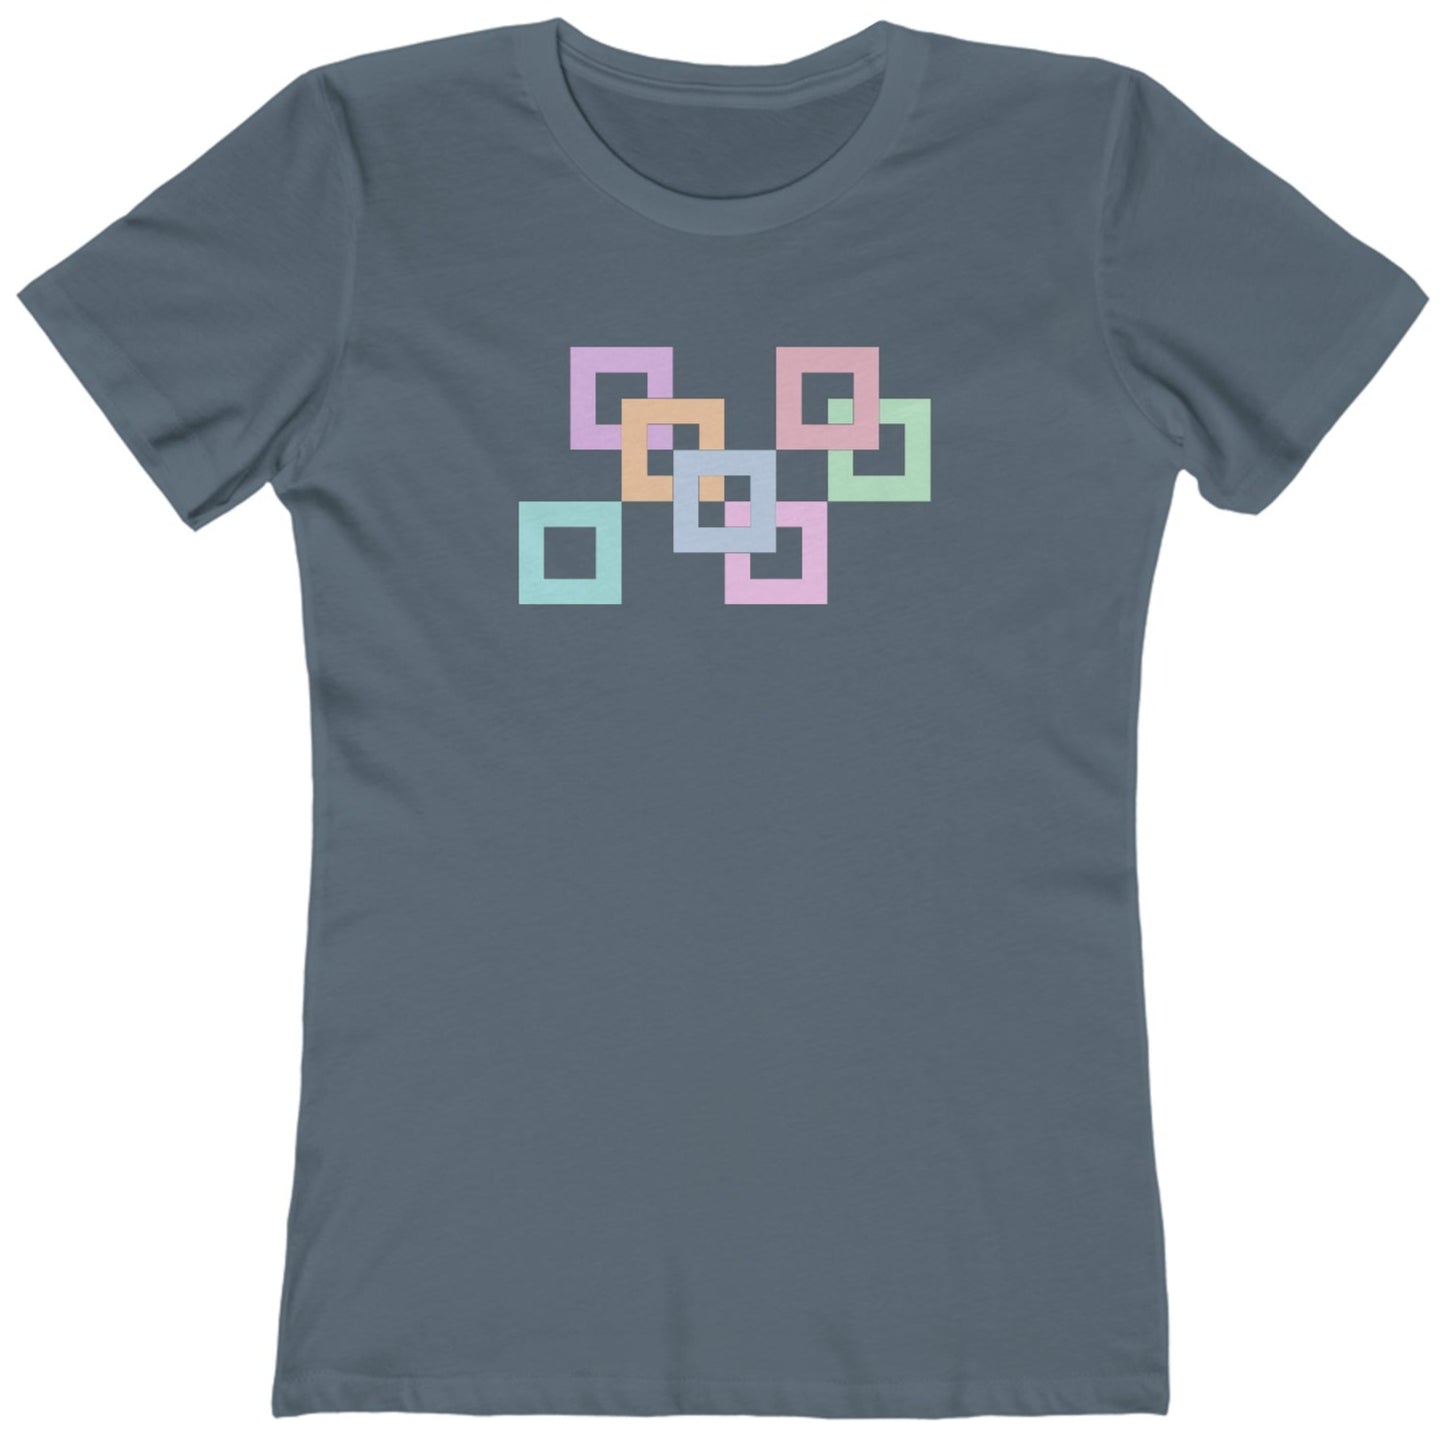 Square Frames - Women's T-Shirt